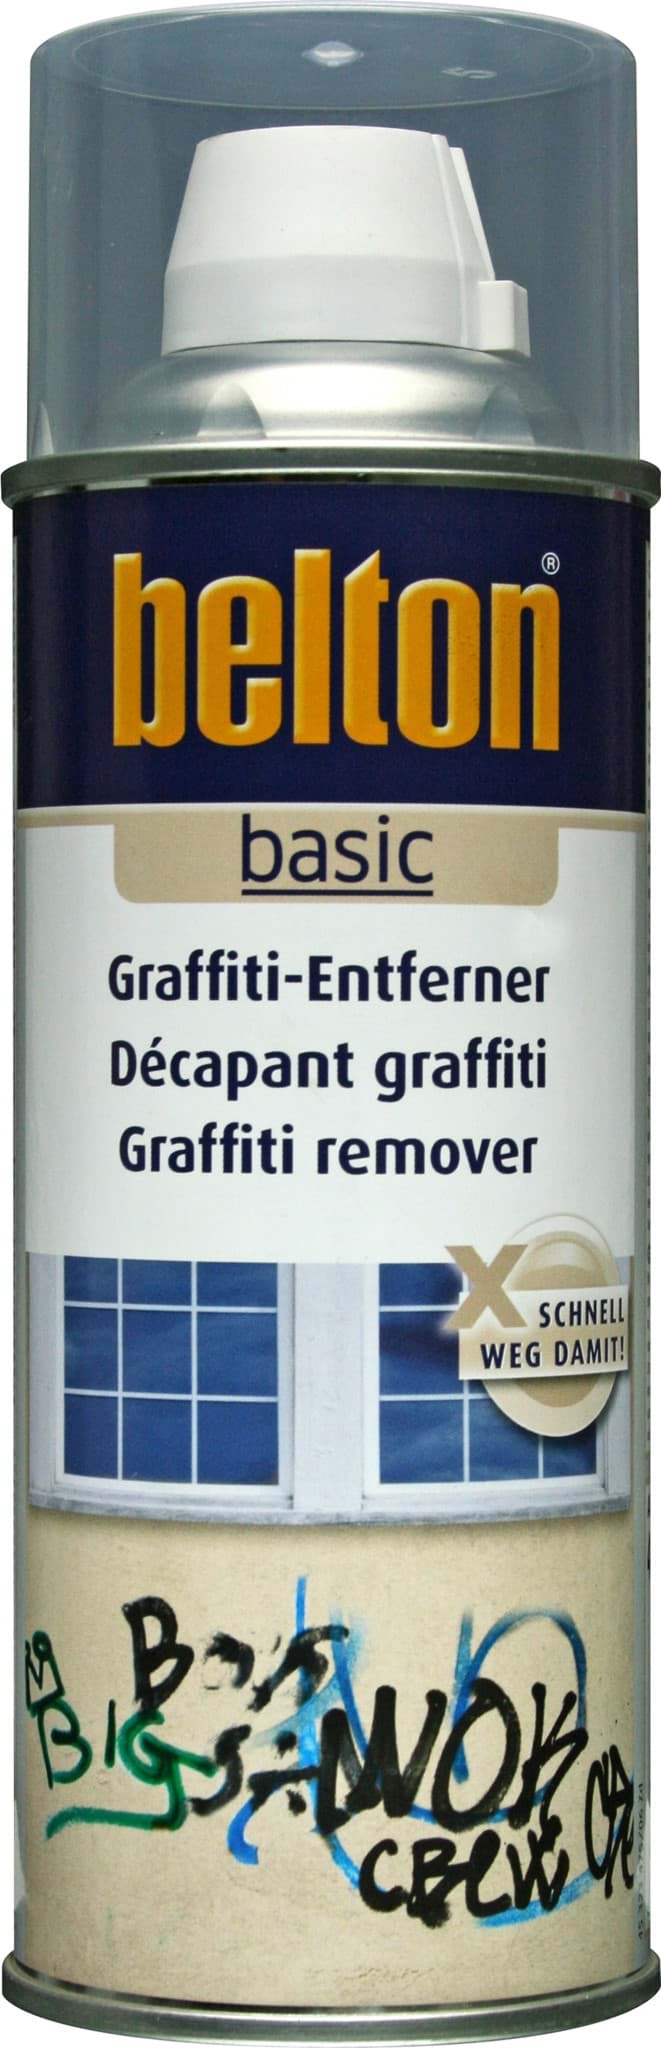 Belton basic Graffiti-Entferner resmi